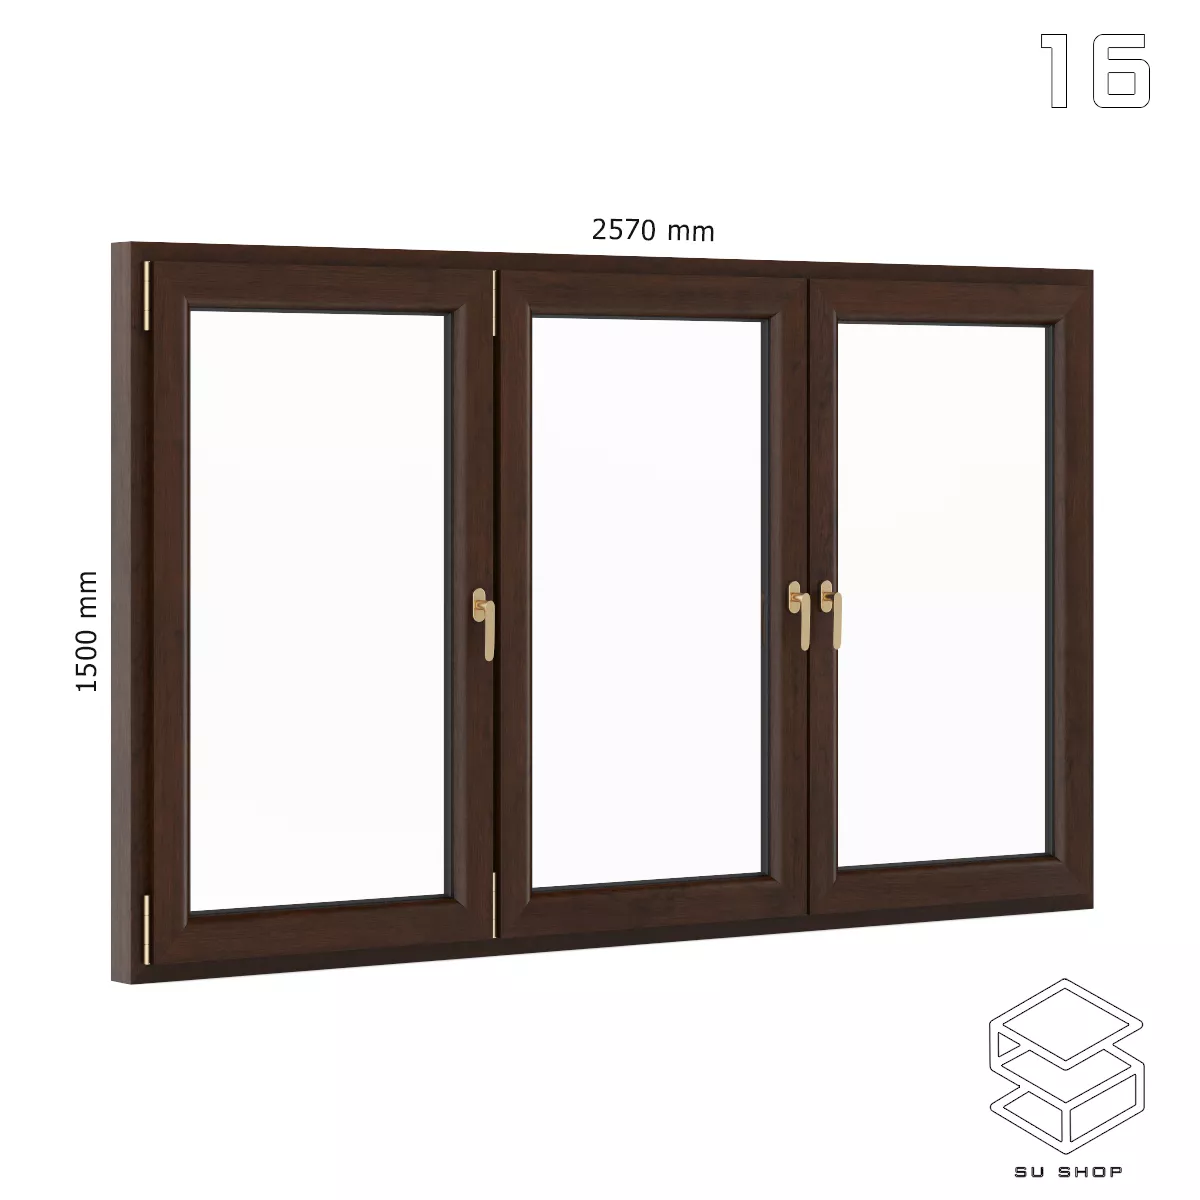 MODERN WINDOWS - SKETCHUP 3D MODEL - VRAY OR ENSCAPE - ID16755